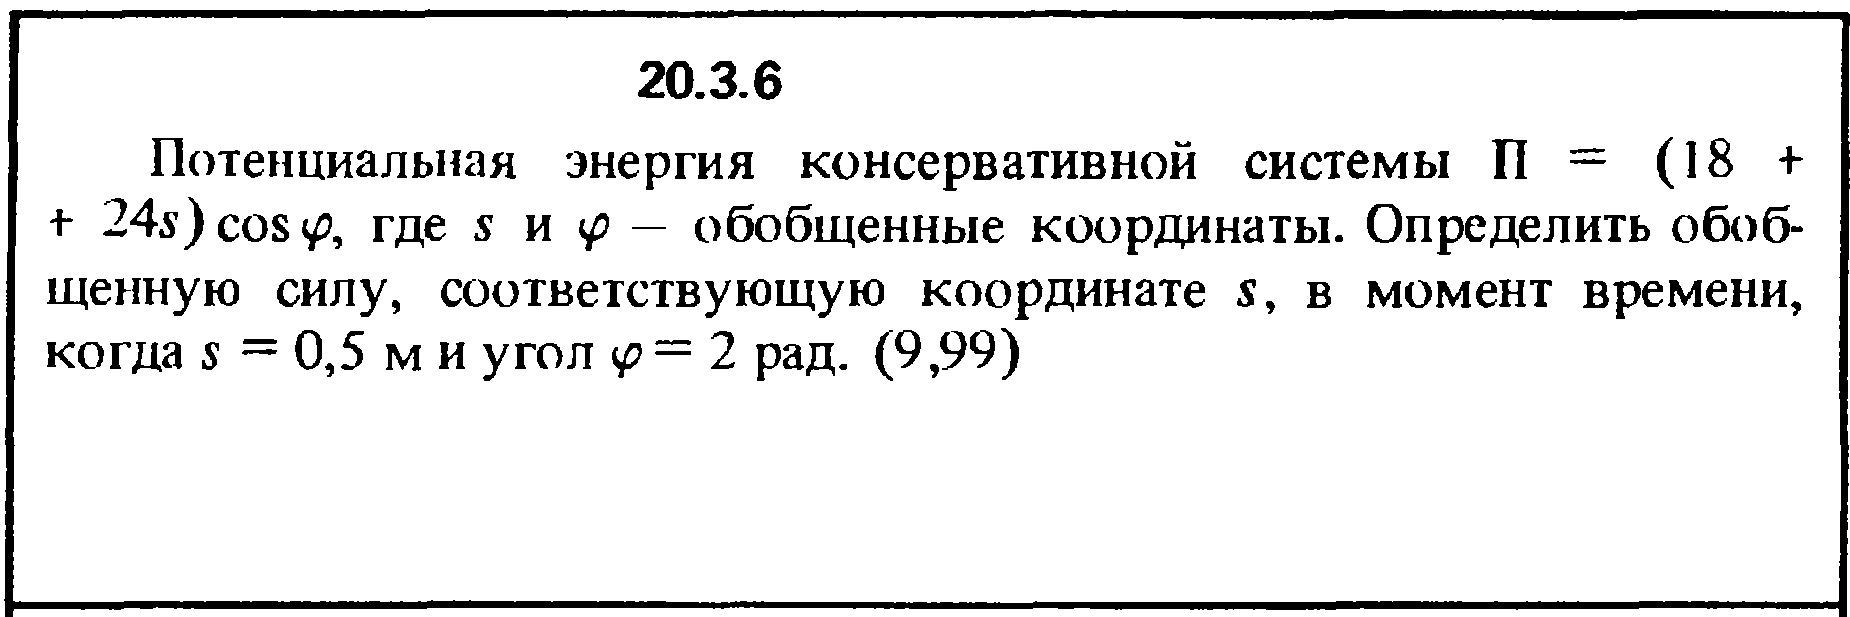 Решение 20.3.6 из сборника (решебника) Кепе О.Е. 1989